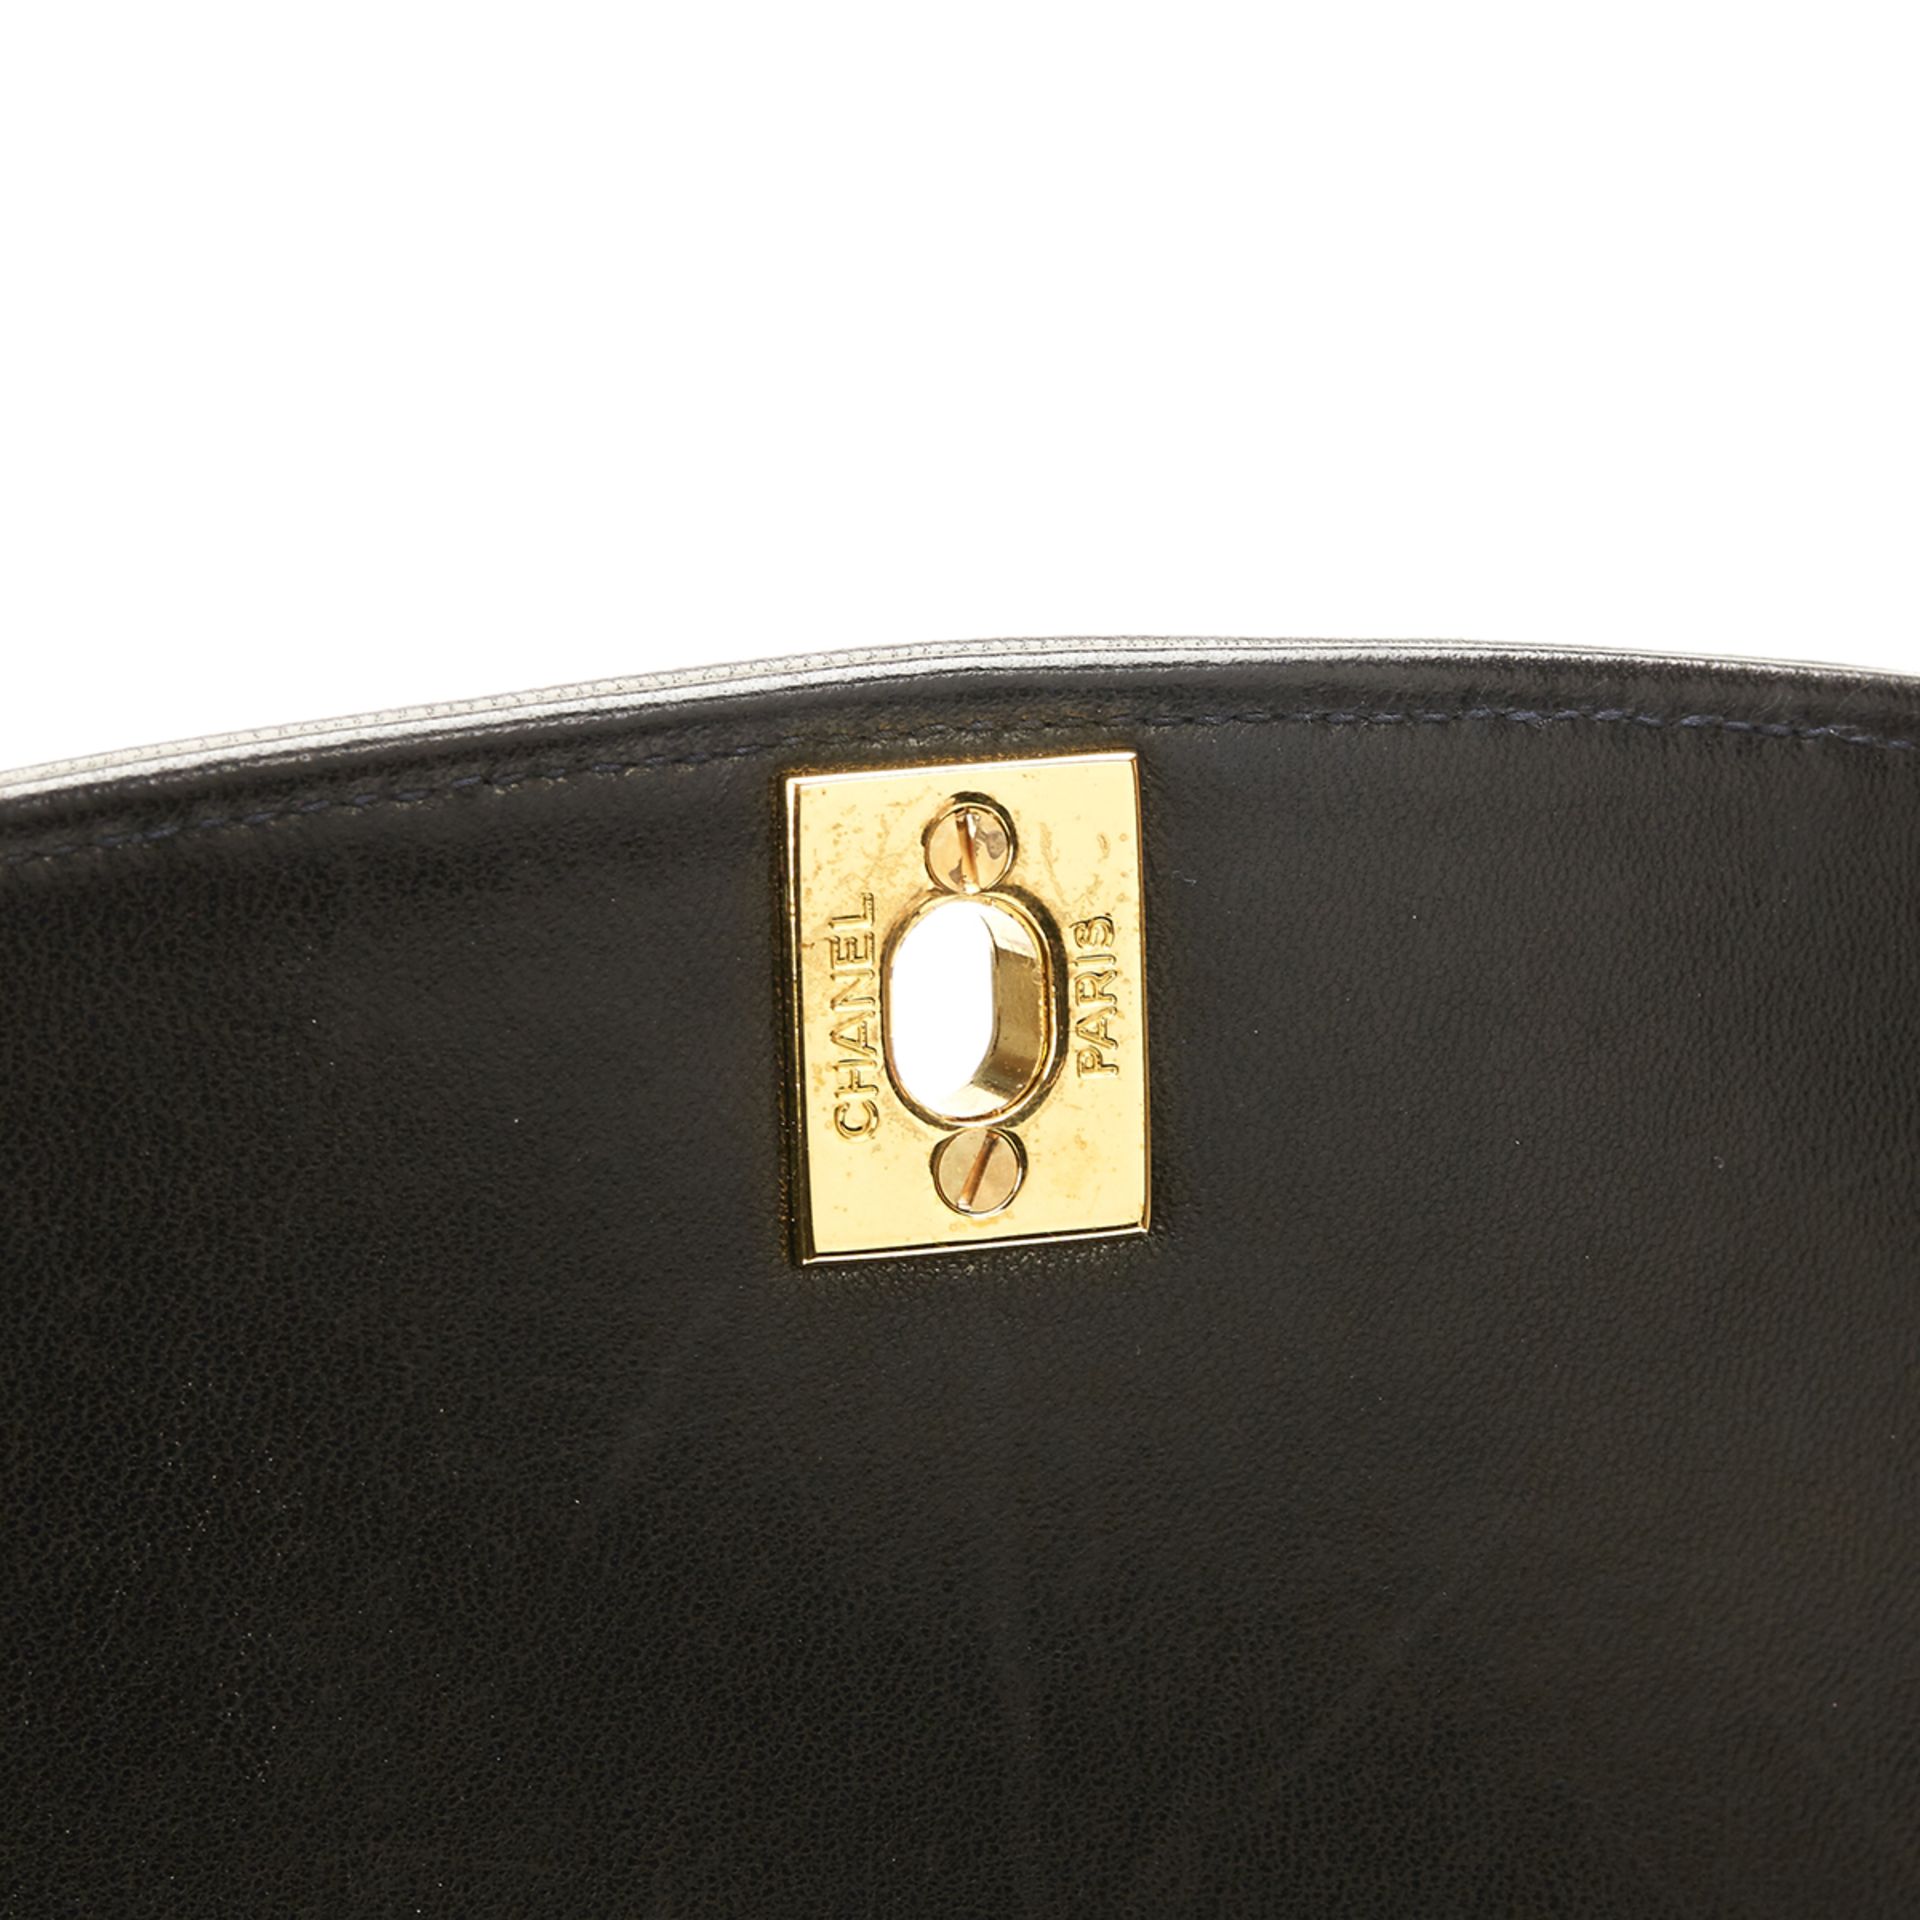 CHANEL Diana Classic Single Flap Bag - Image 8 of 10